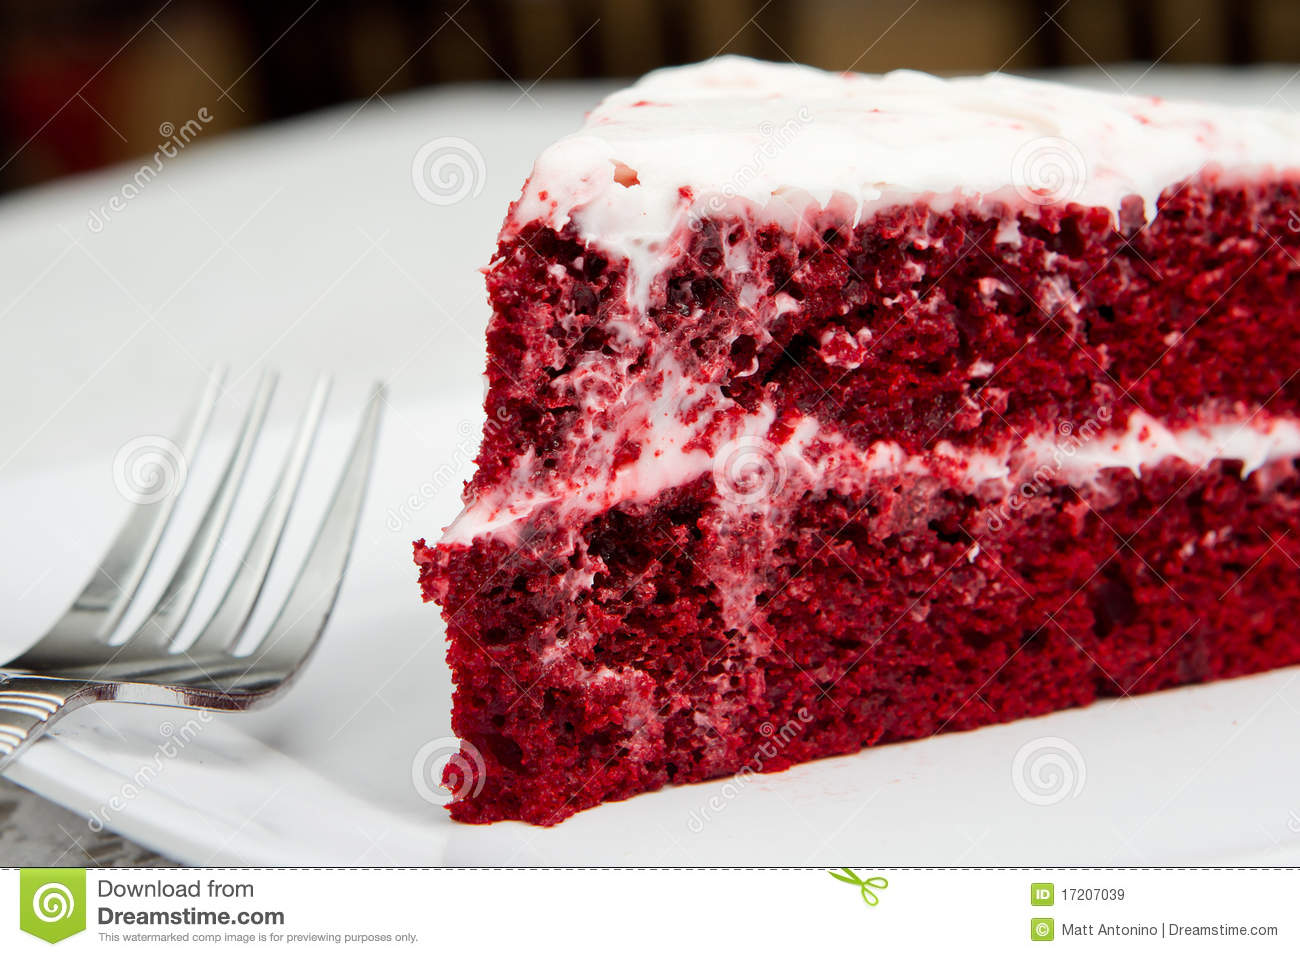 Red Velvet Cake Royalty Free Stock Images   Image  17207039